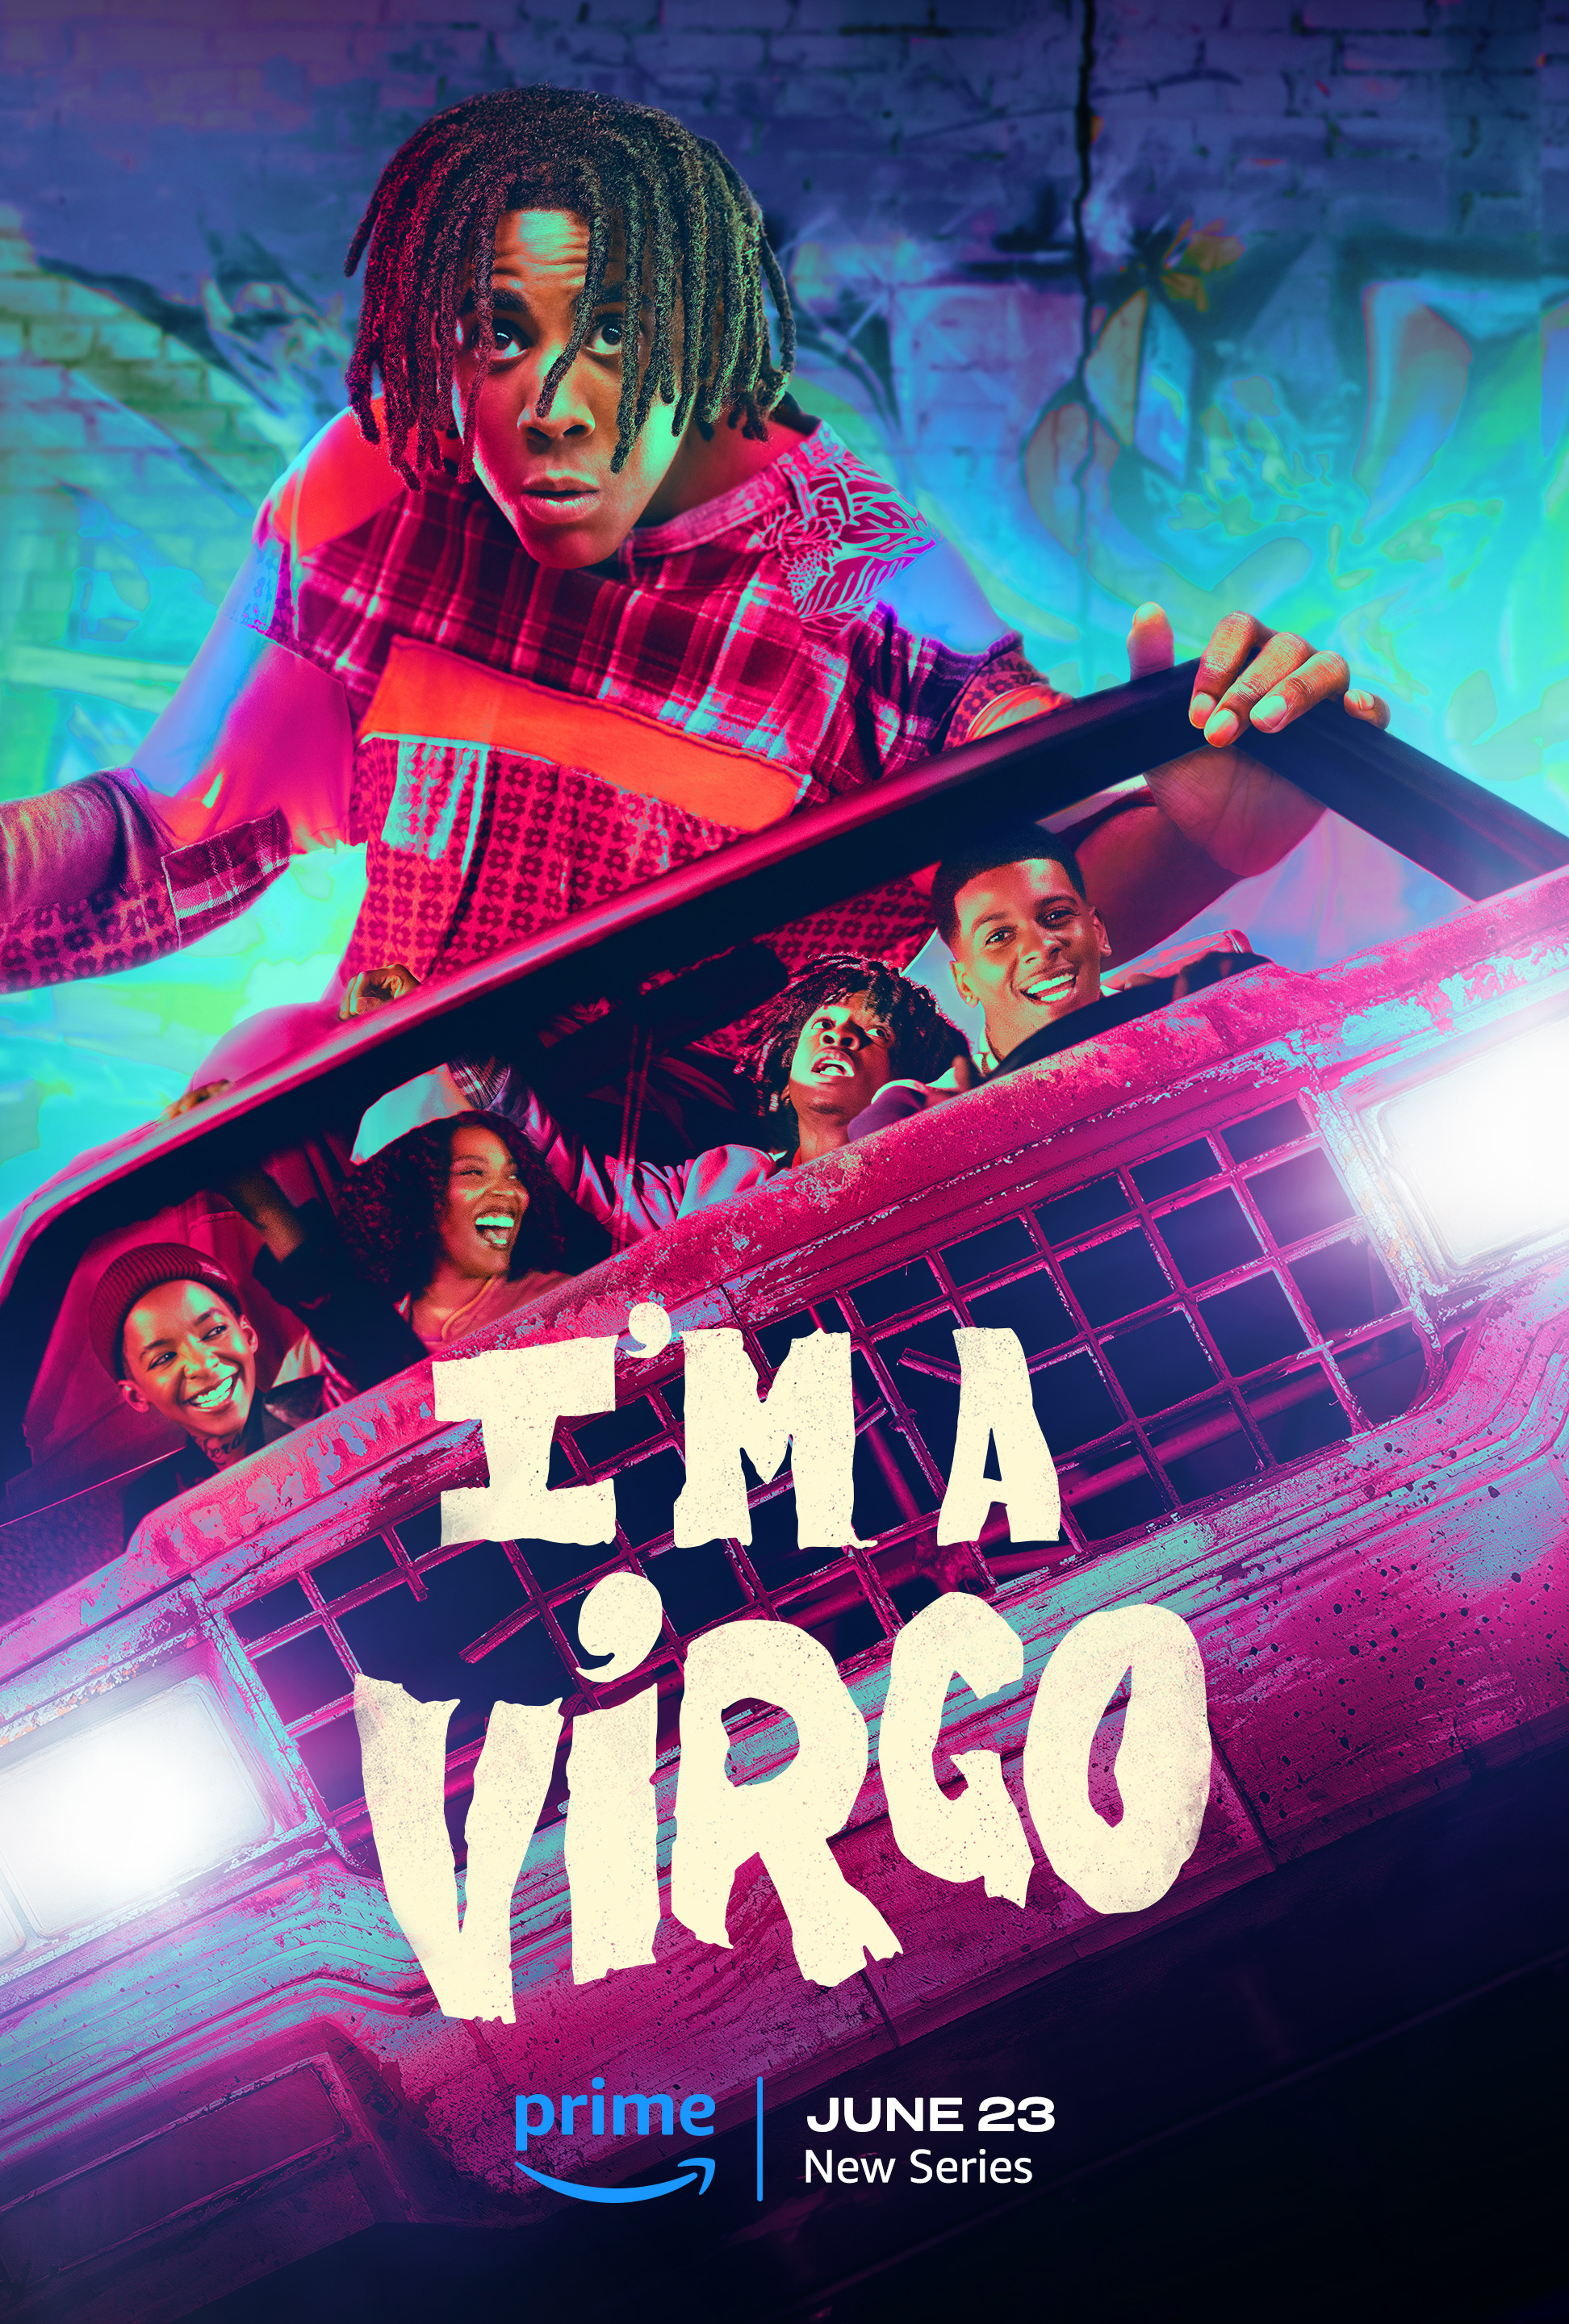 Mega Sized TV Poster Image for I'm a Virgo (#1 of 3)